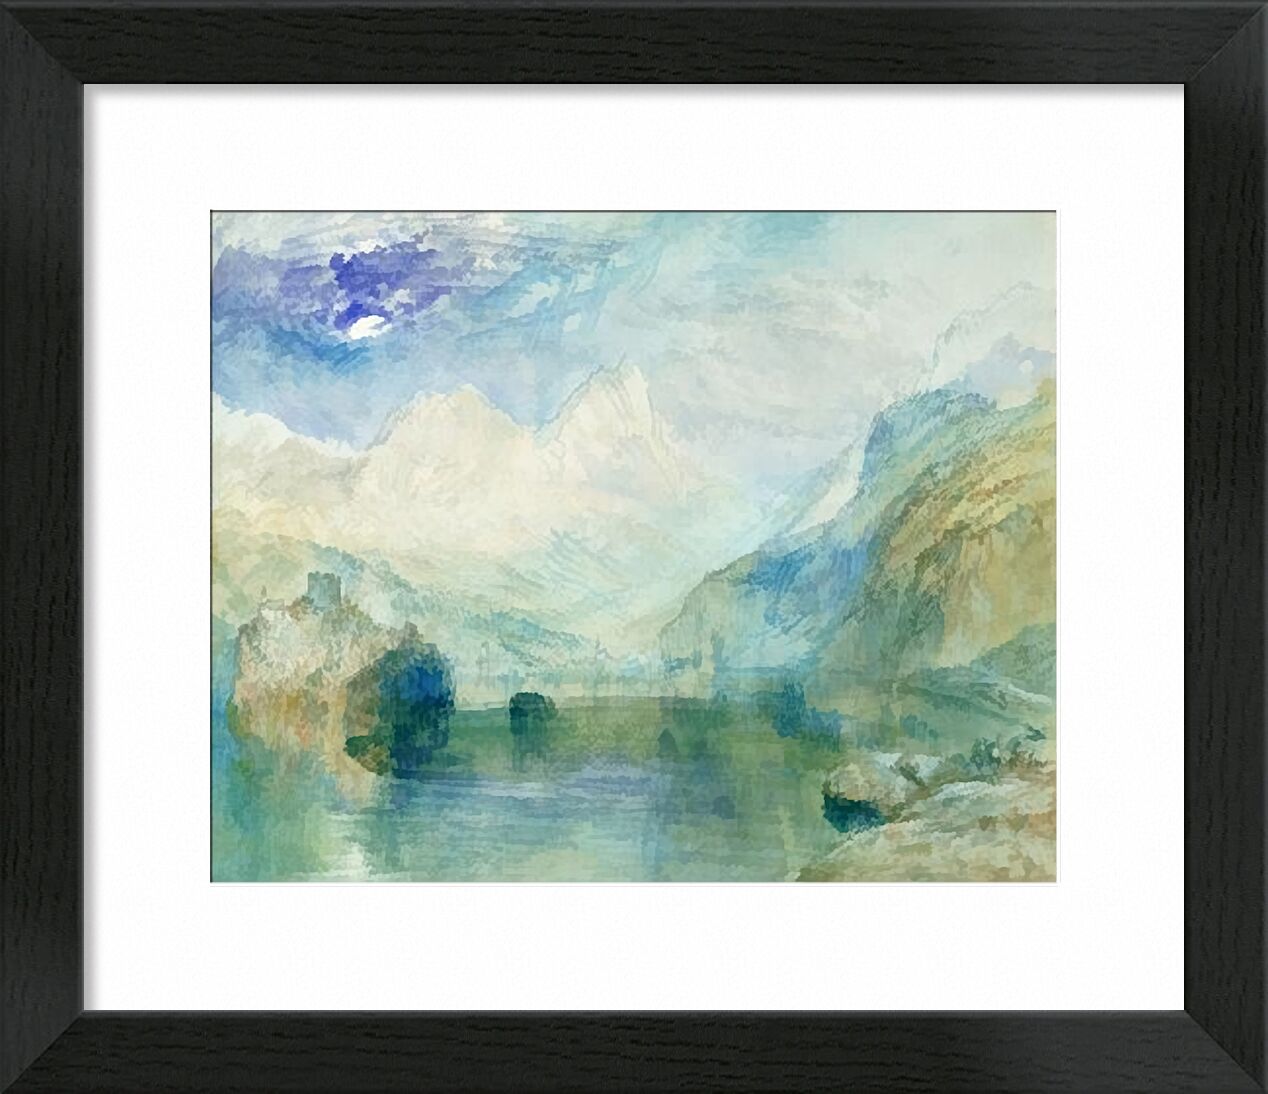 The Lowerzer See - TURNER desde Bellas artes, Prodi Art, TORNERO, lago, montañas, pintura